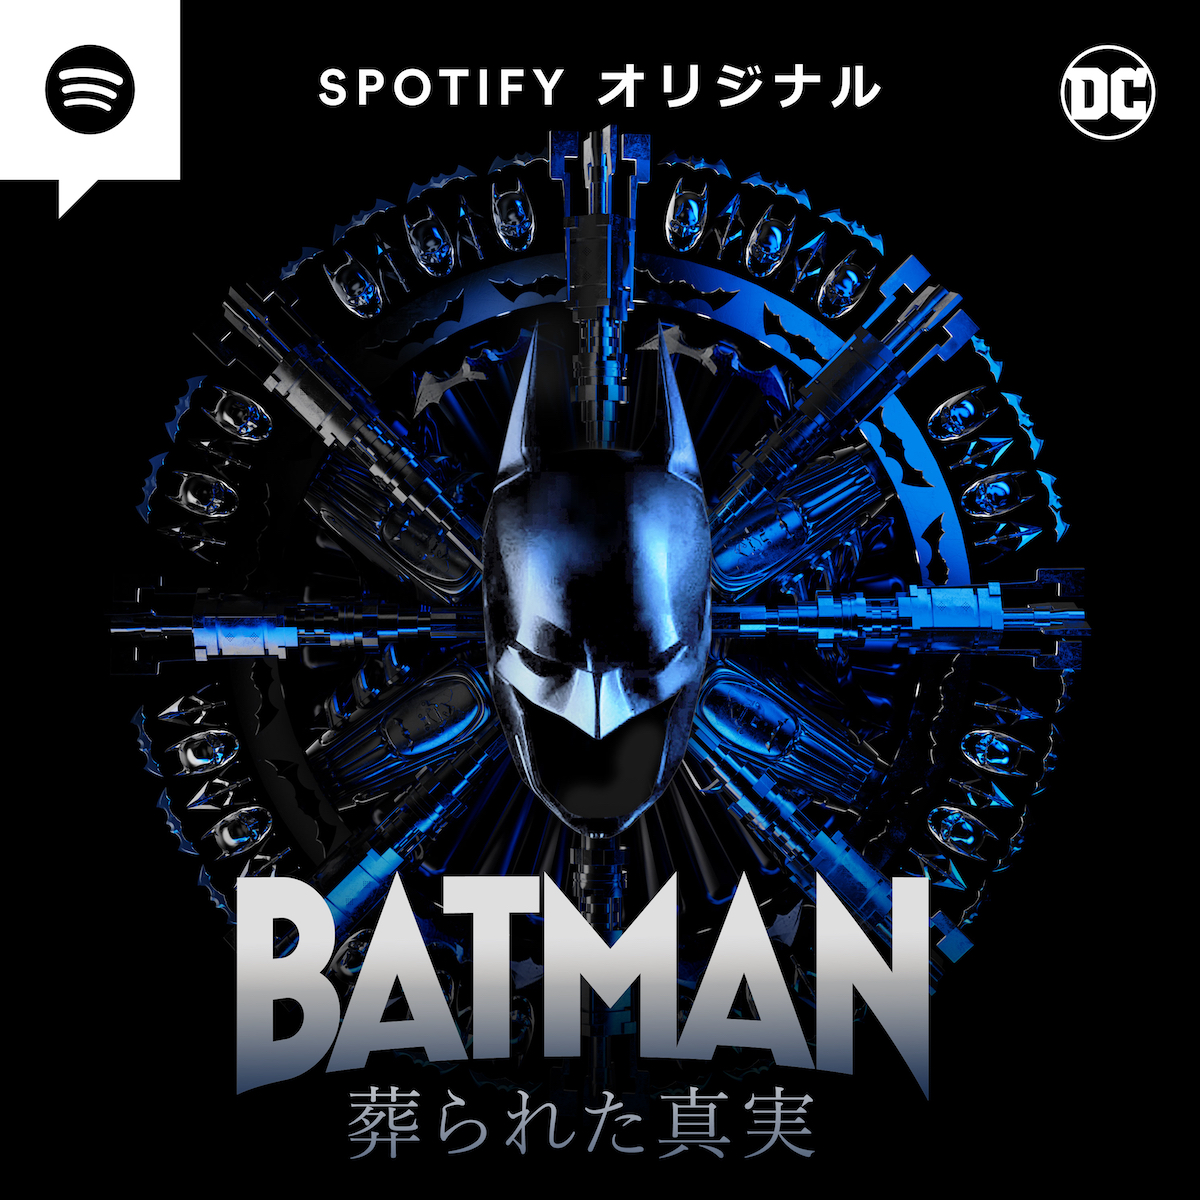 Spotifyで『バットマン』の番組が独占配信